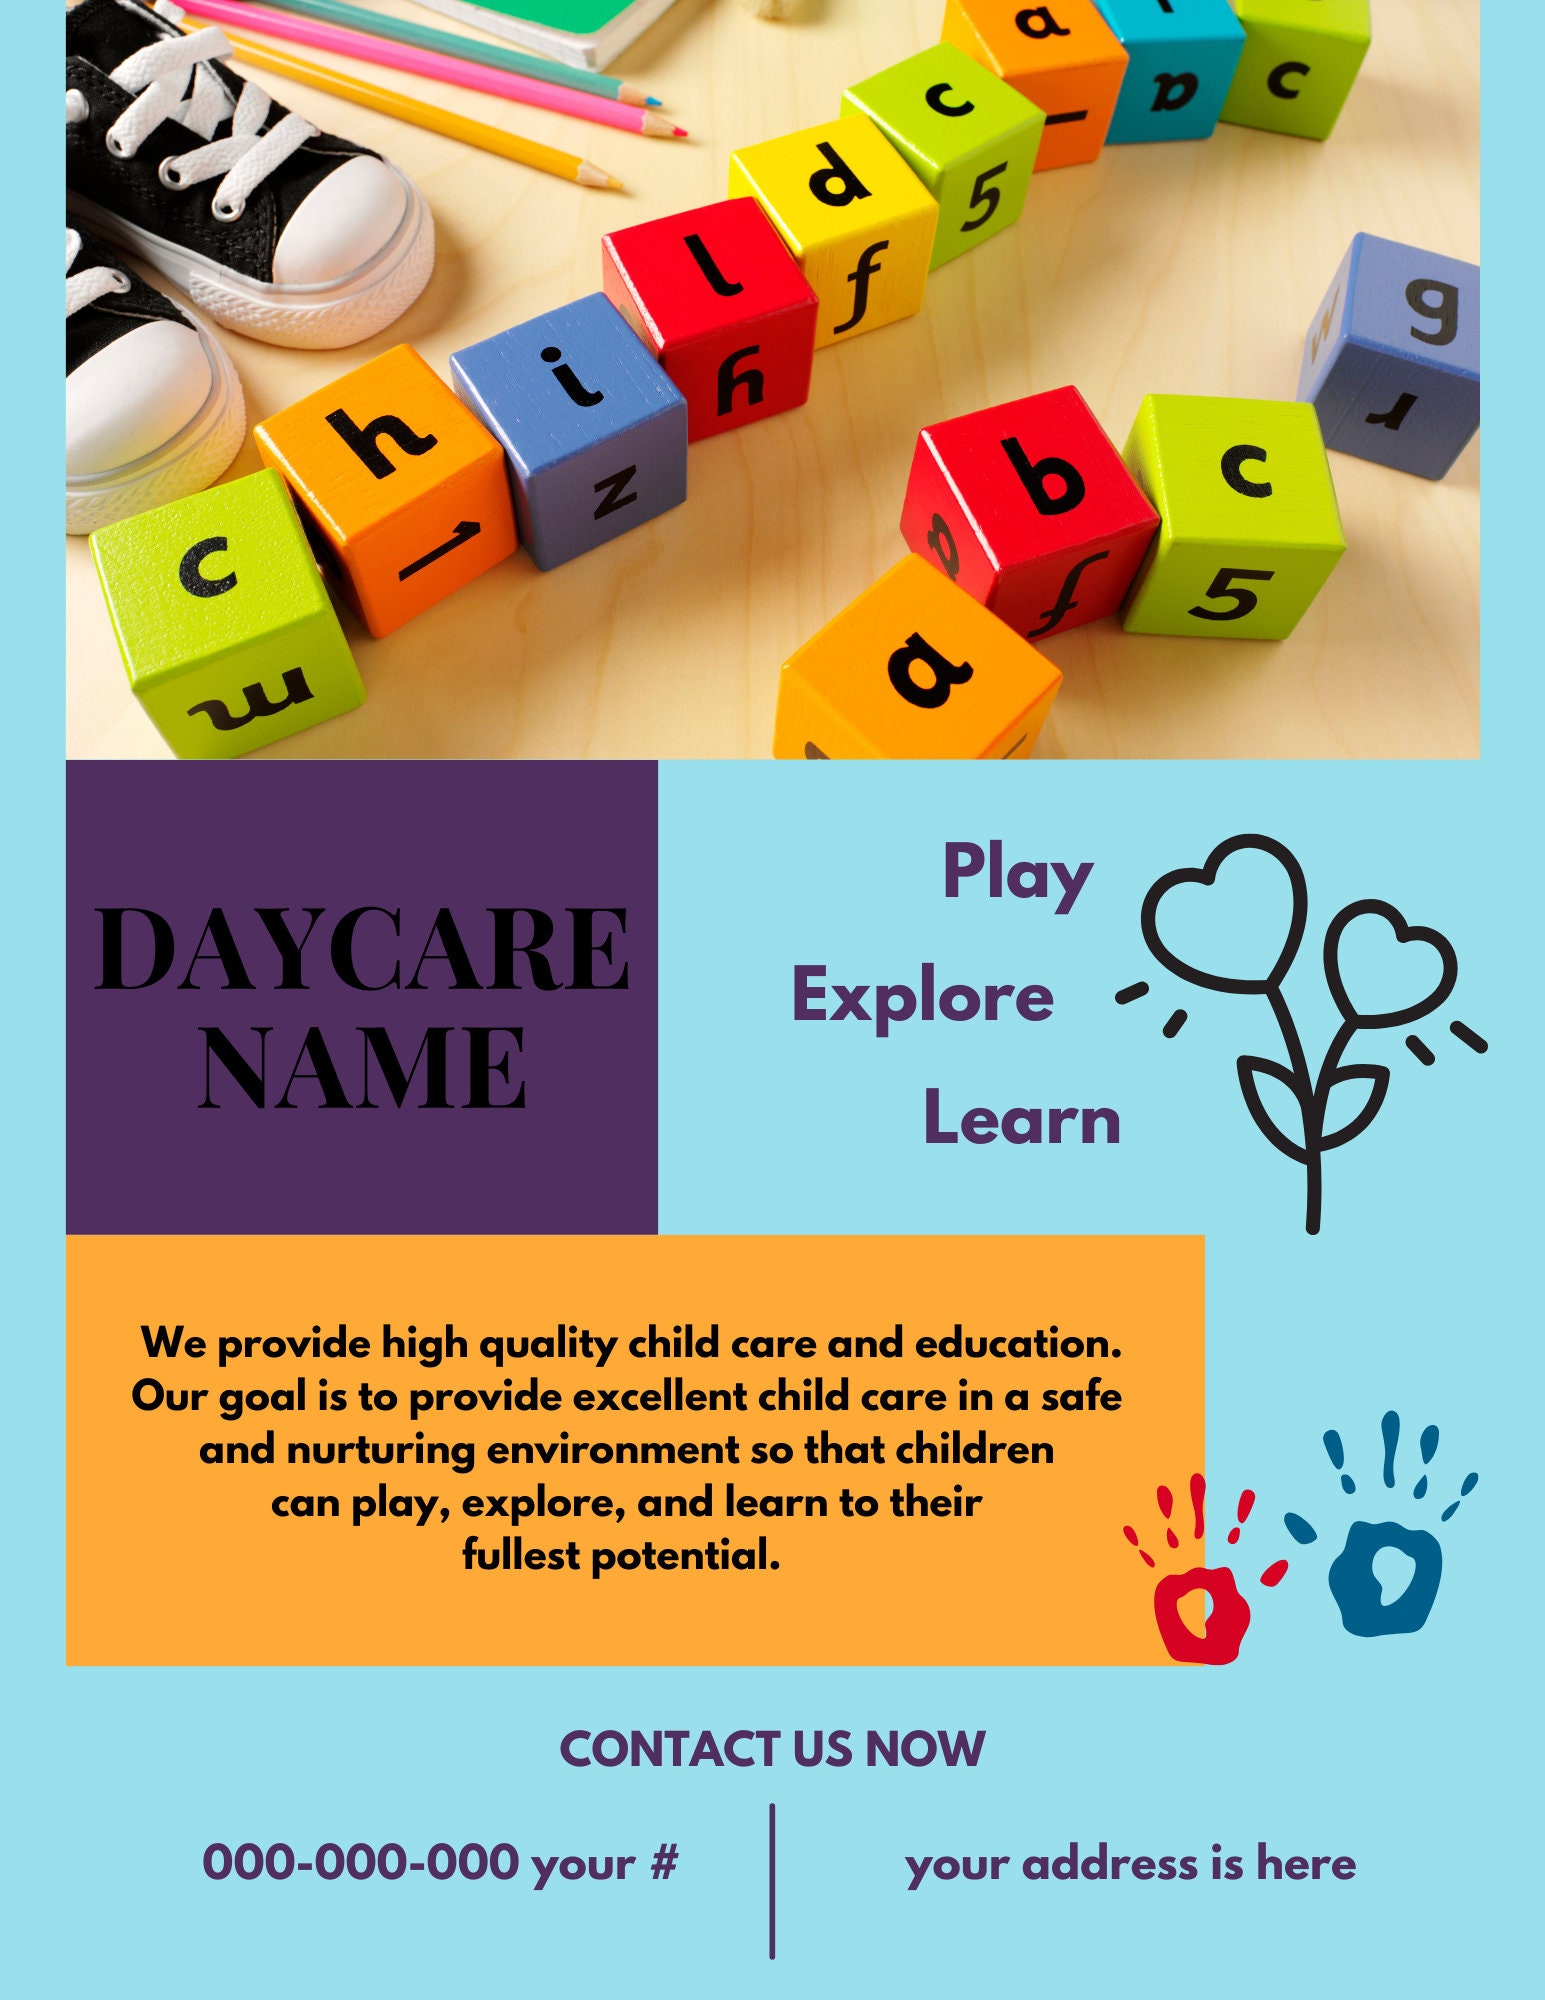 Daycare Supplies / Parent Notice / Supplies Needed / Childcare Notice /  Home Daycare / Parent Notice